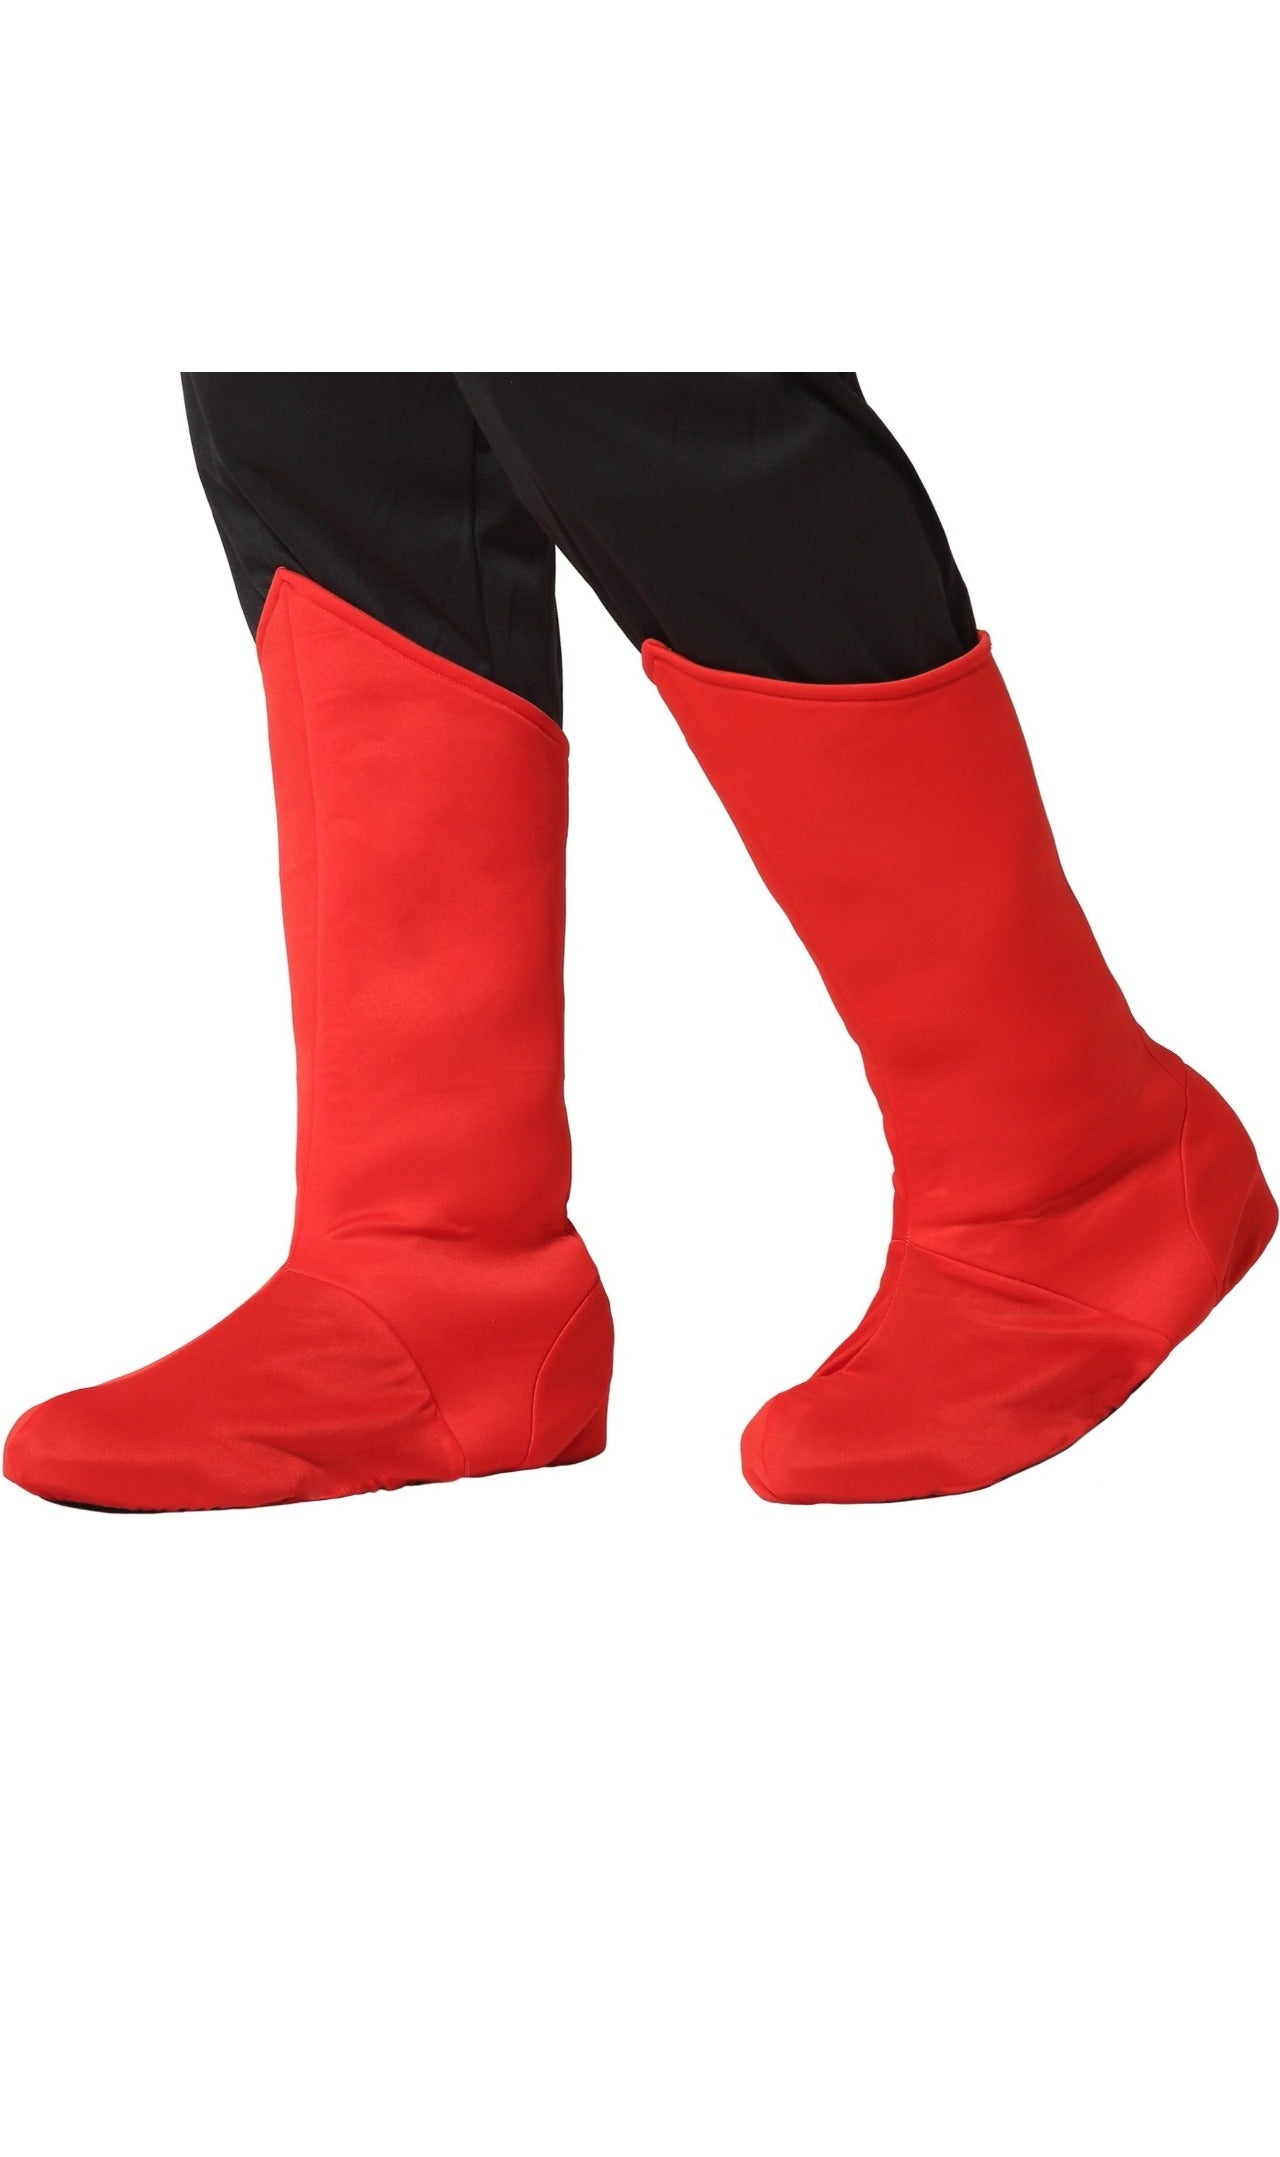 Couvre-bottes Rouge Super Héros